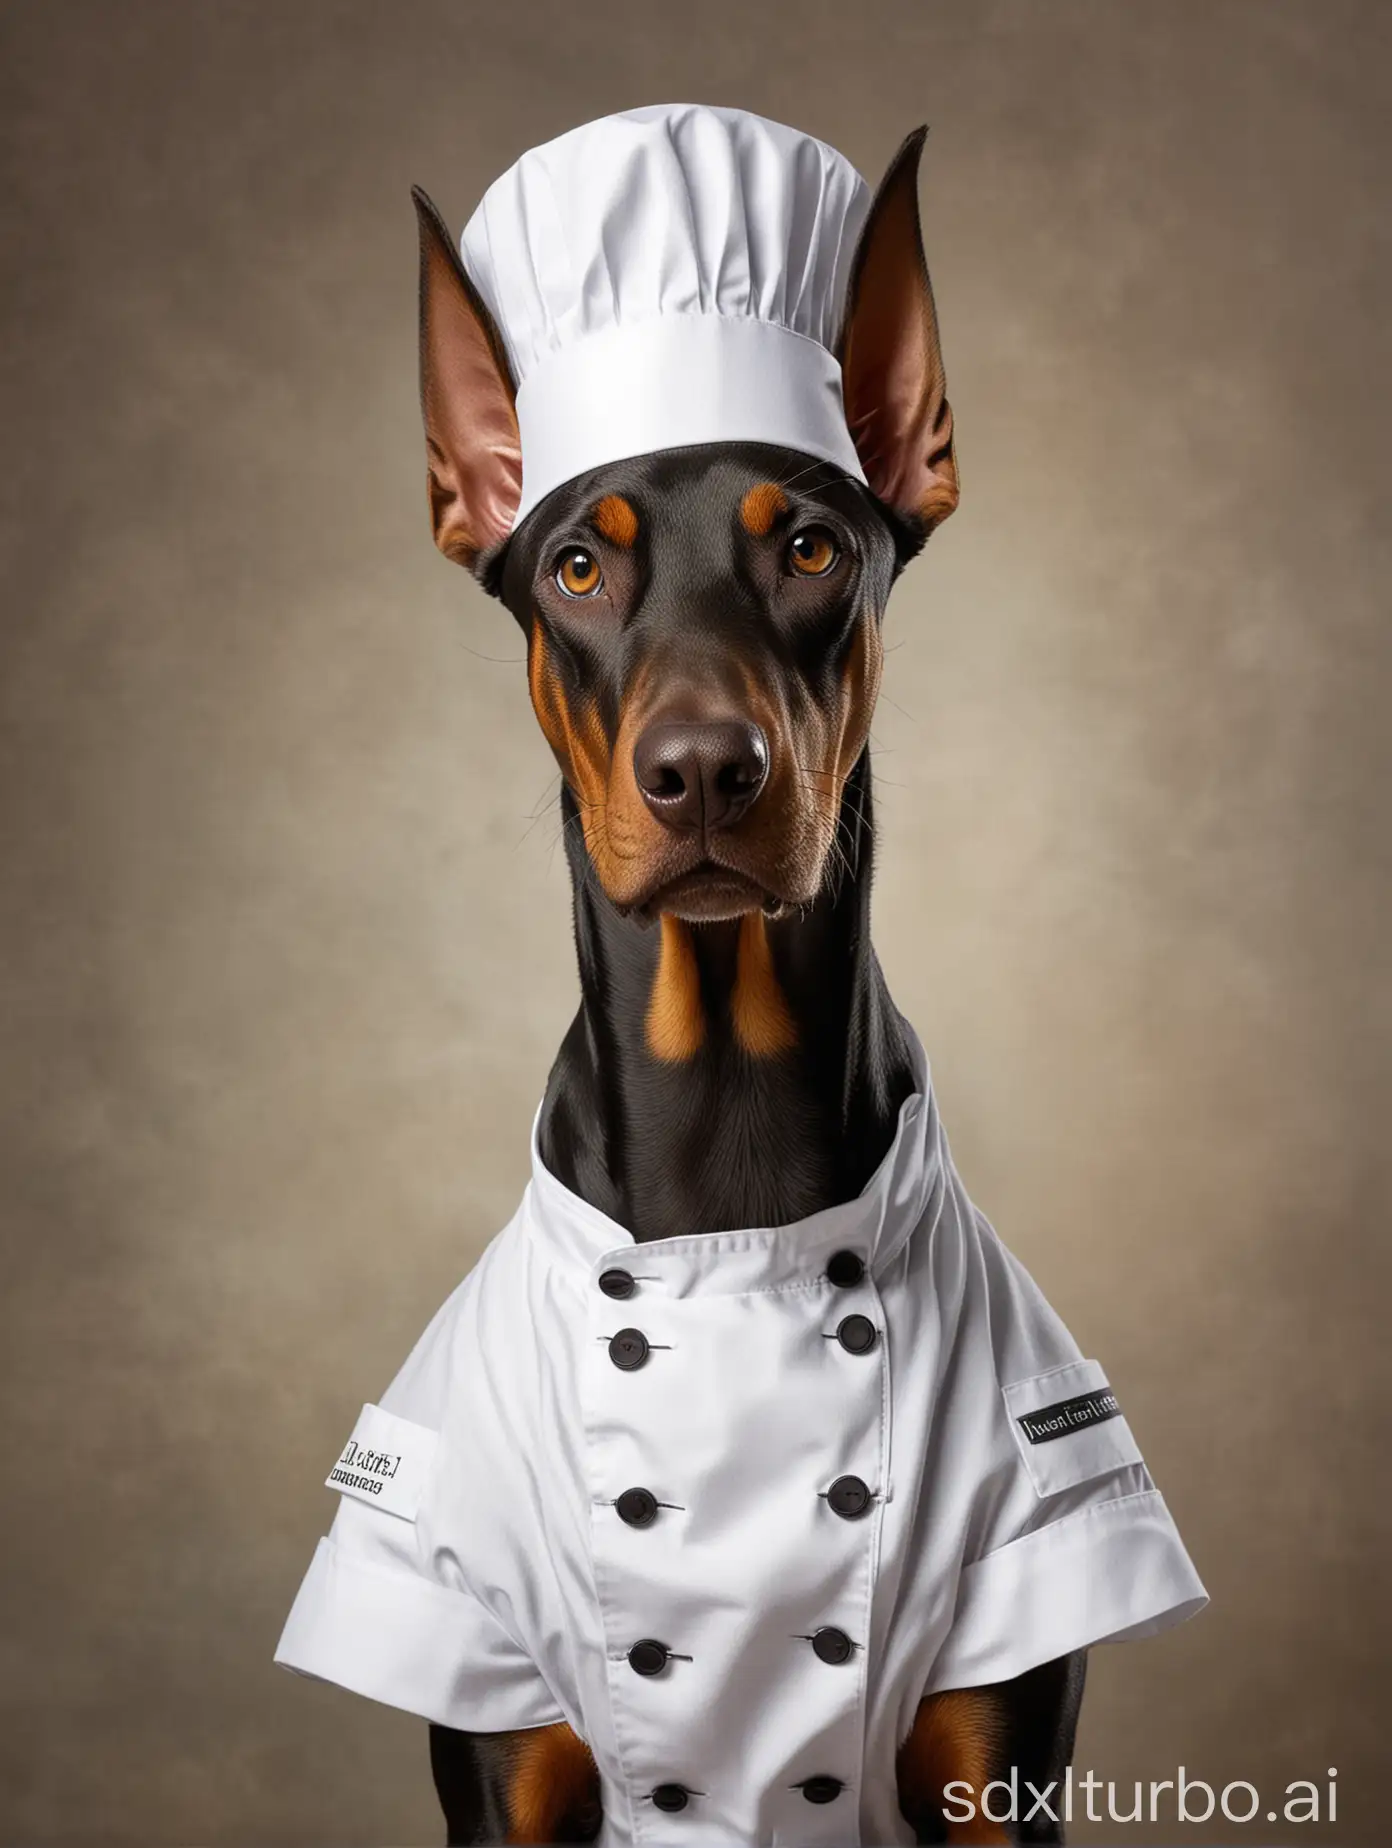 A Doberman dog in a chef's uniform